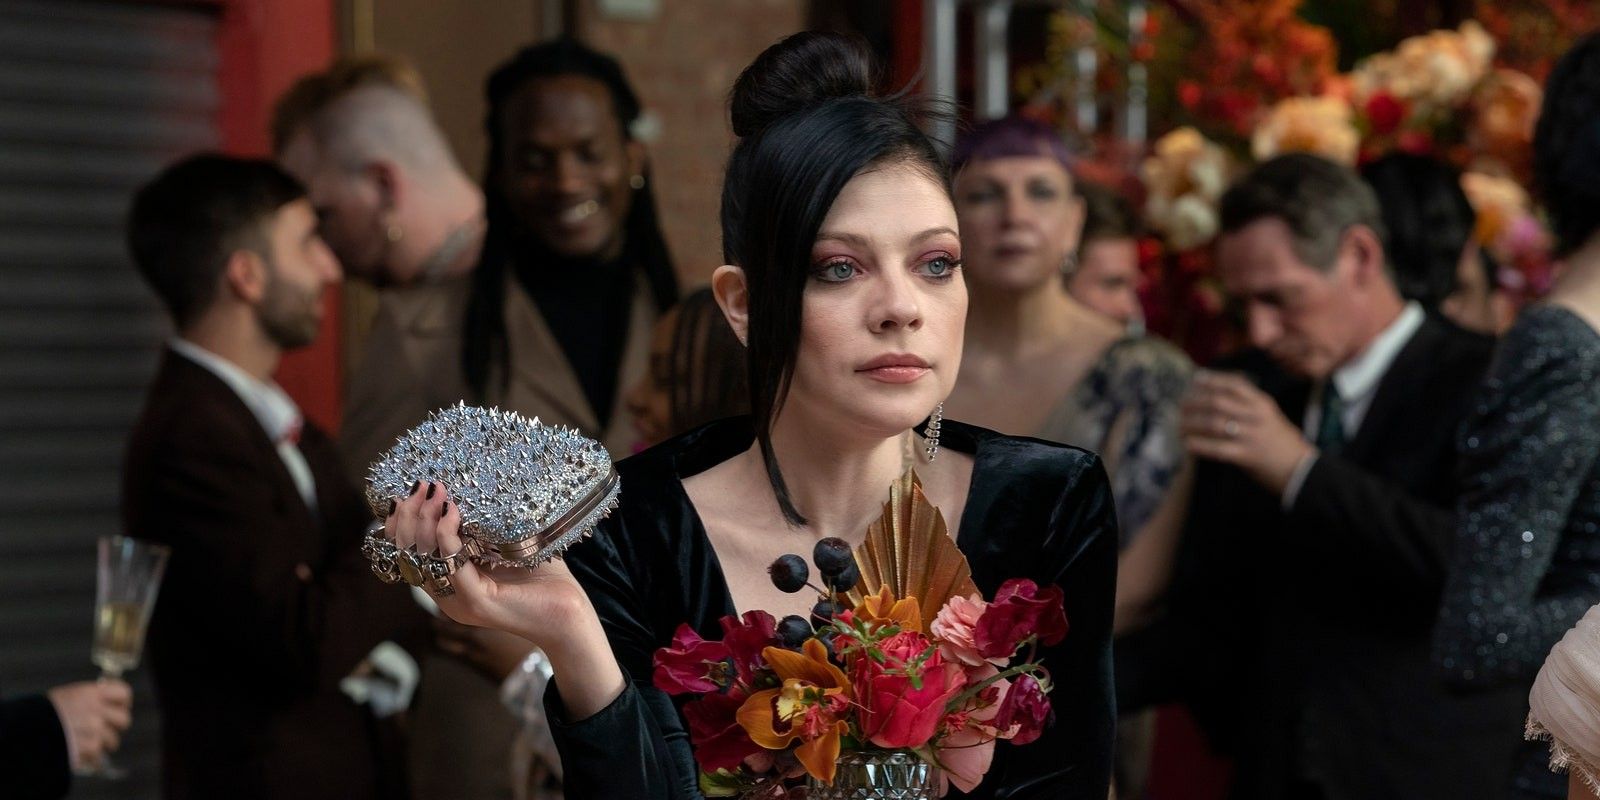 Gossip Girl Season 2 Teases Georgina Sparks' Return In HBO Max Reboot